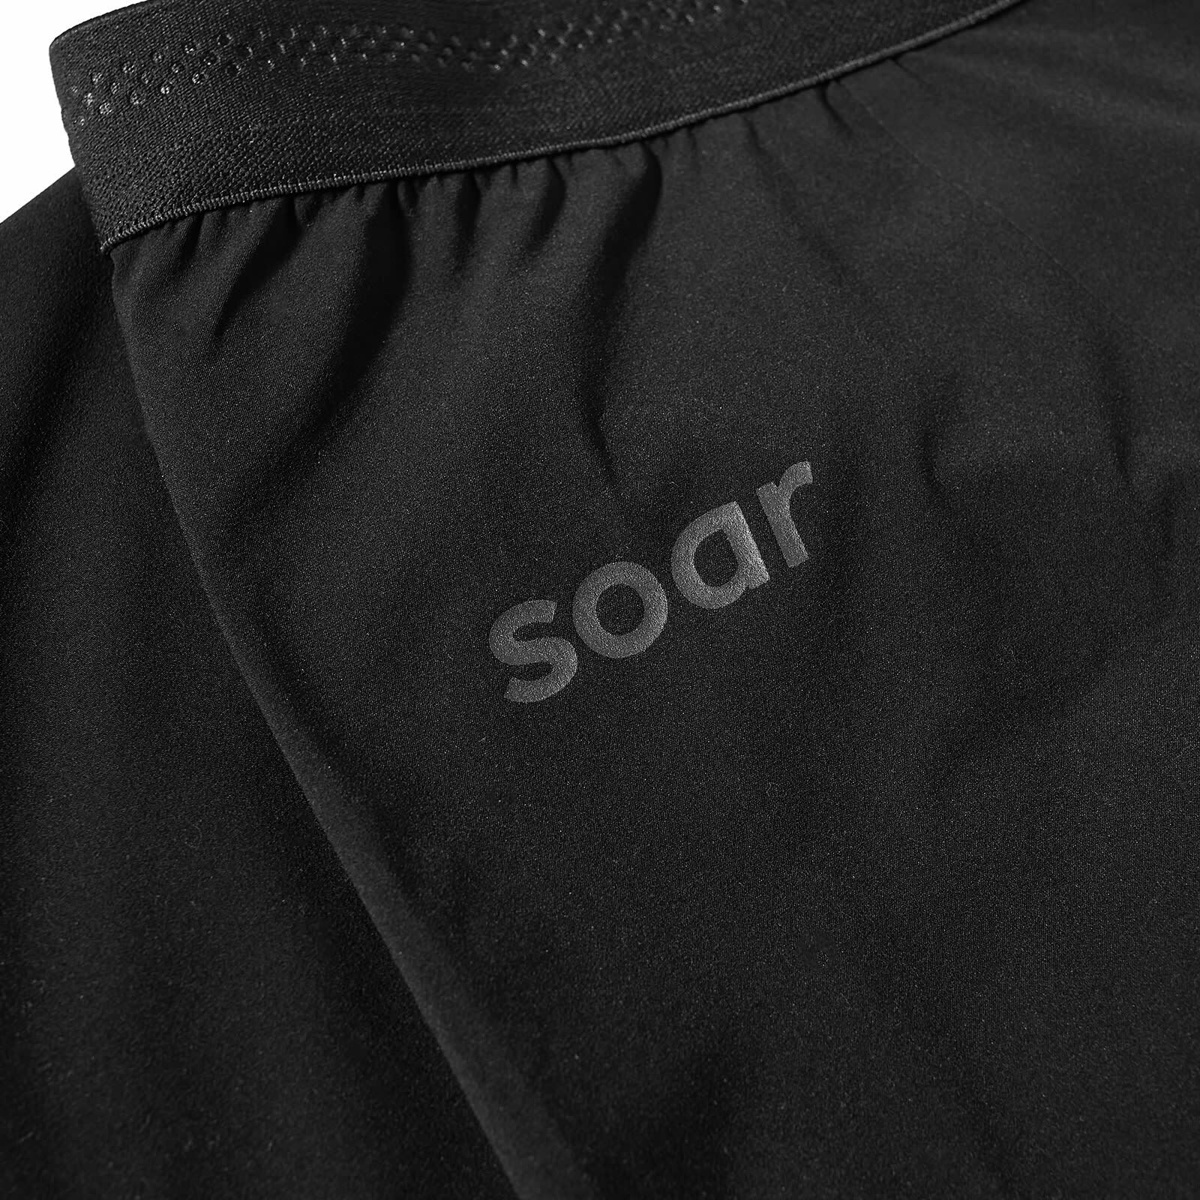 Soar Running Black Dual-Fabric 3.0 Leggings Soar Running